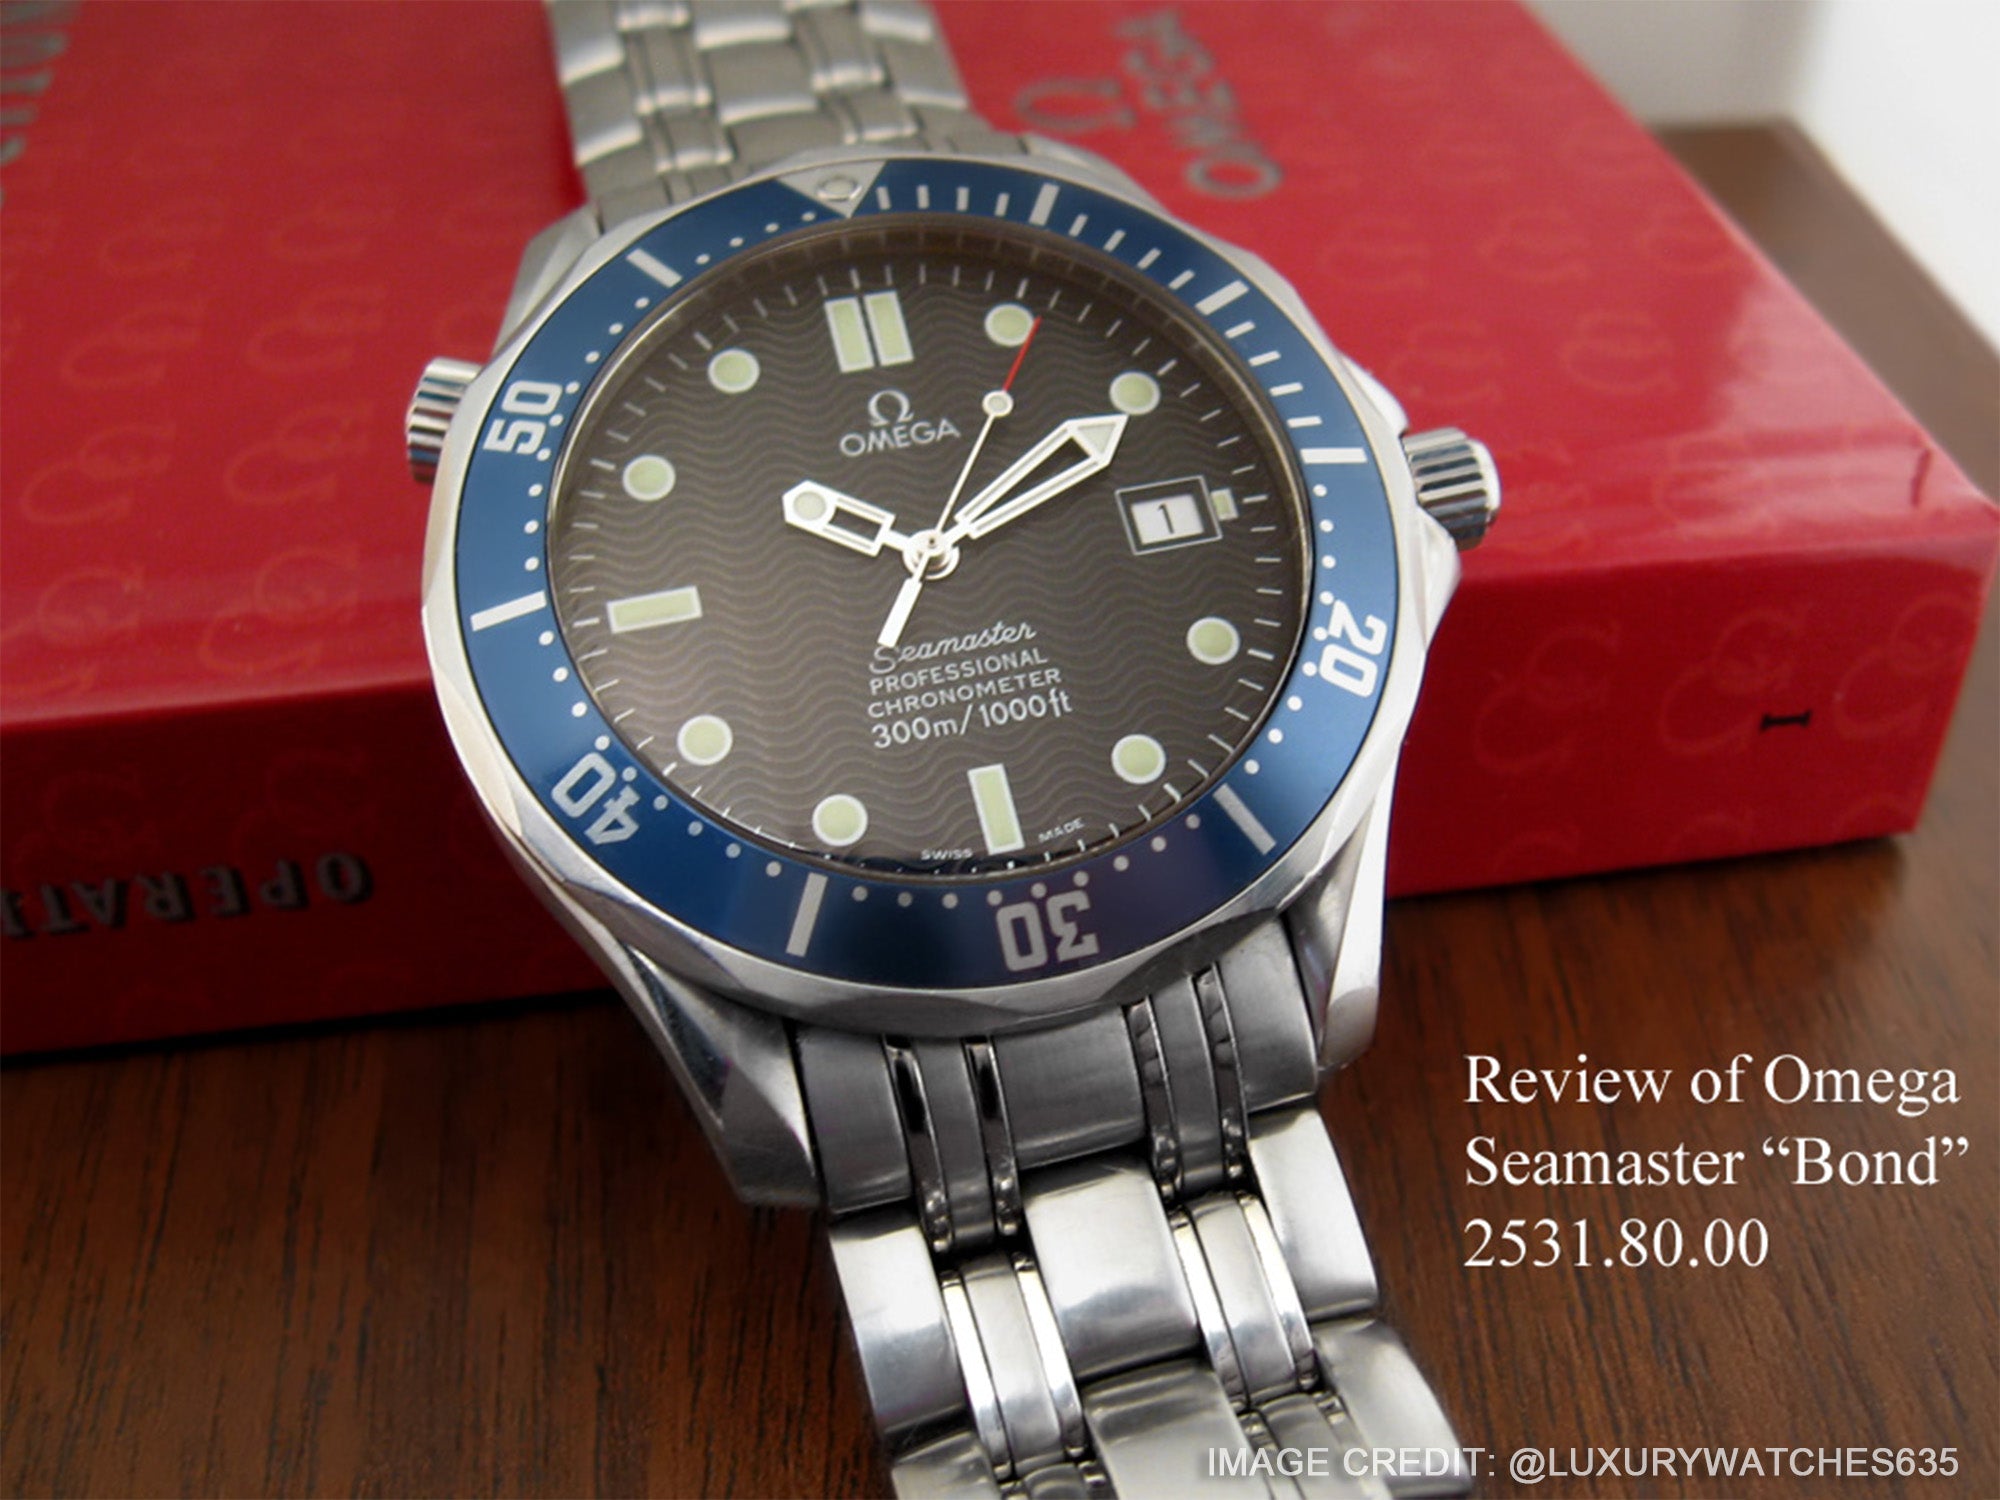 Omega Seamaster Automatic Chronometer 300M Ref. 2531.80.00, both worn by Pierce Brosnan